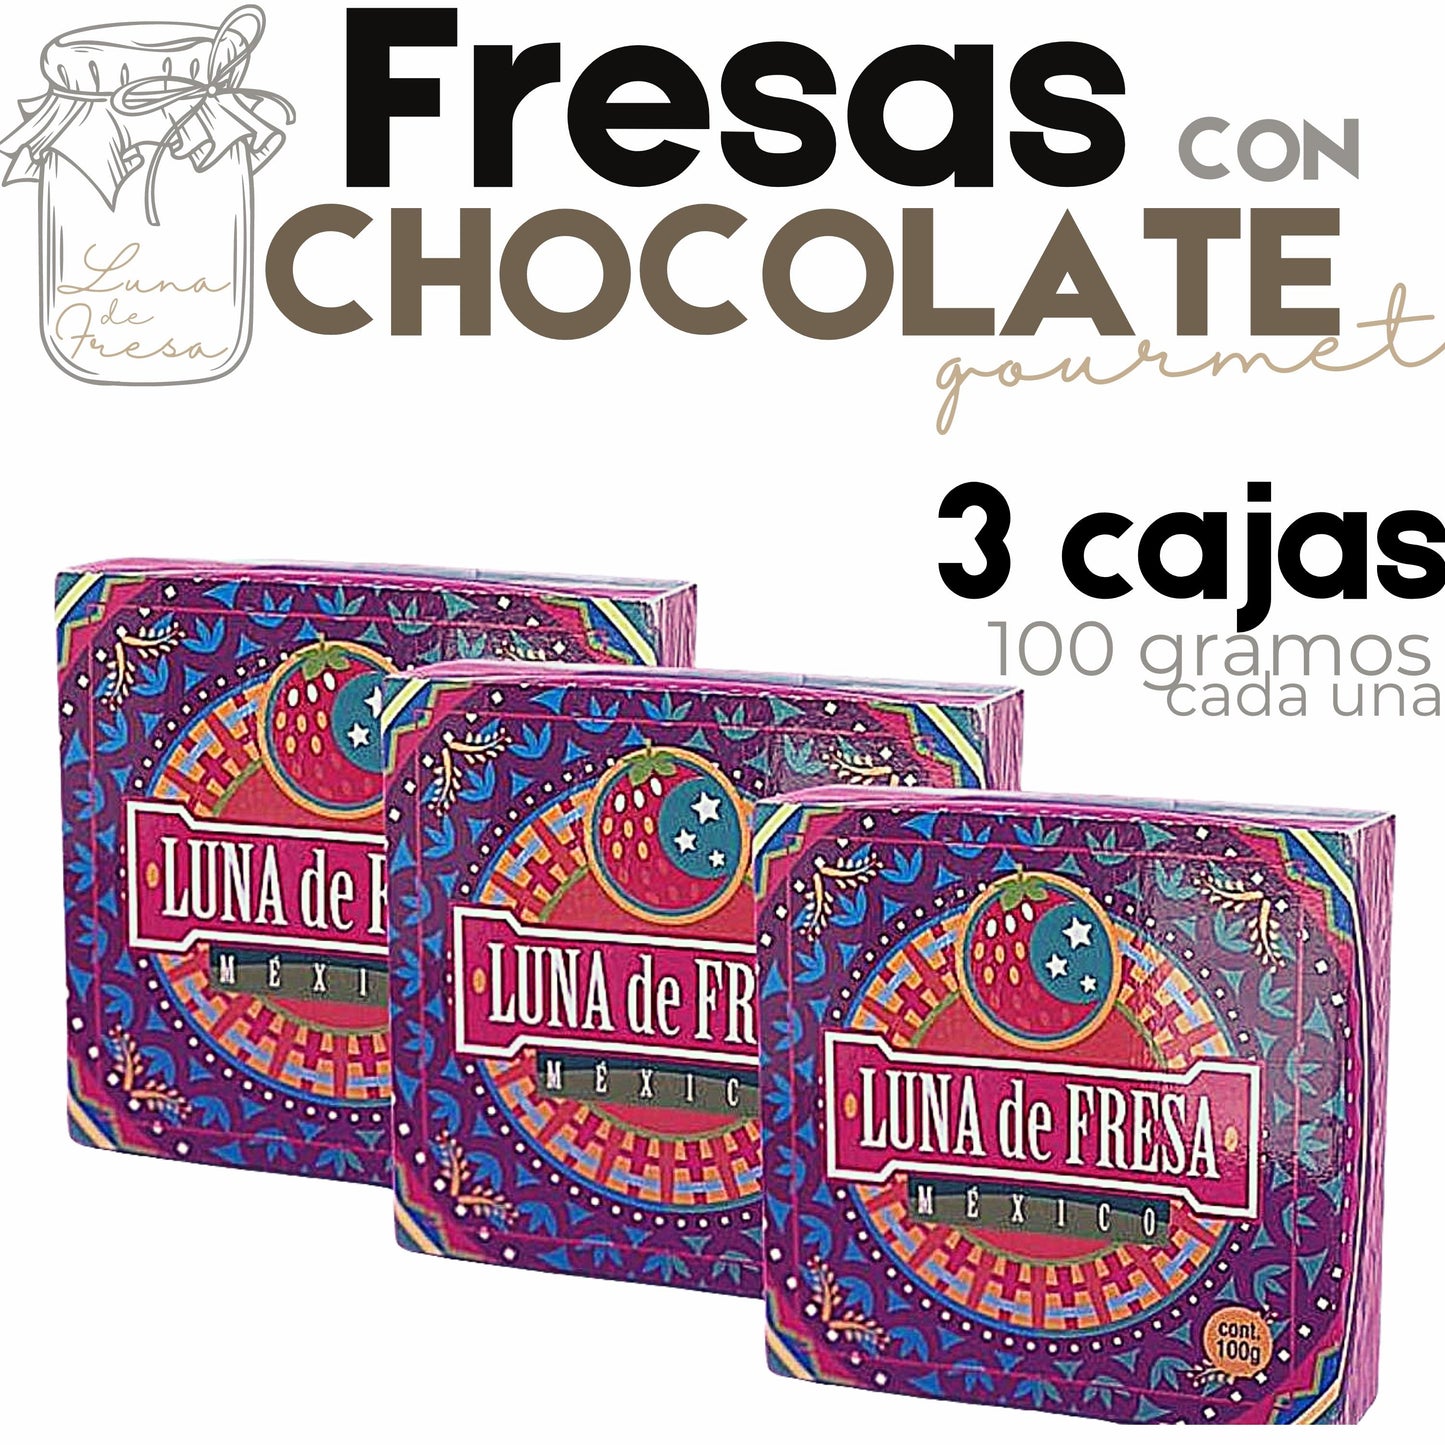 Fresas Con Chocolate Cristalizadas 3 Cajas 300g.